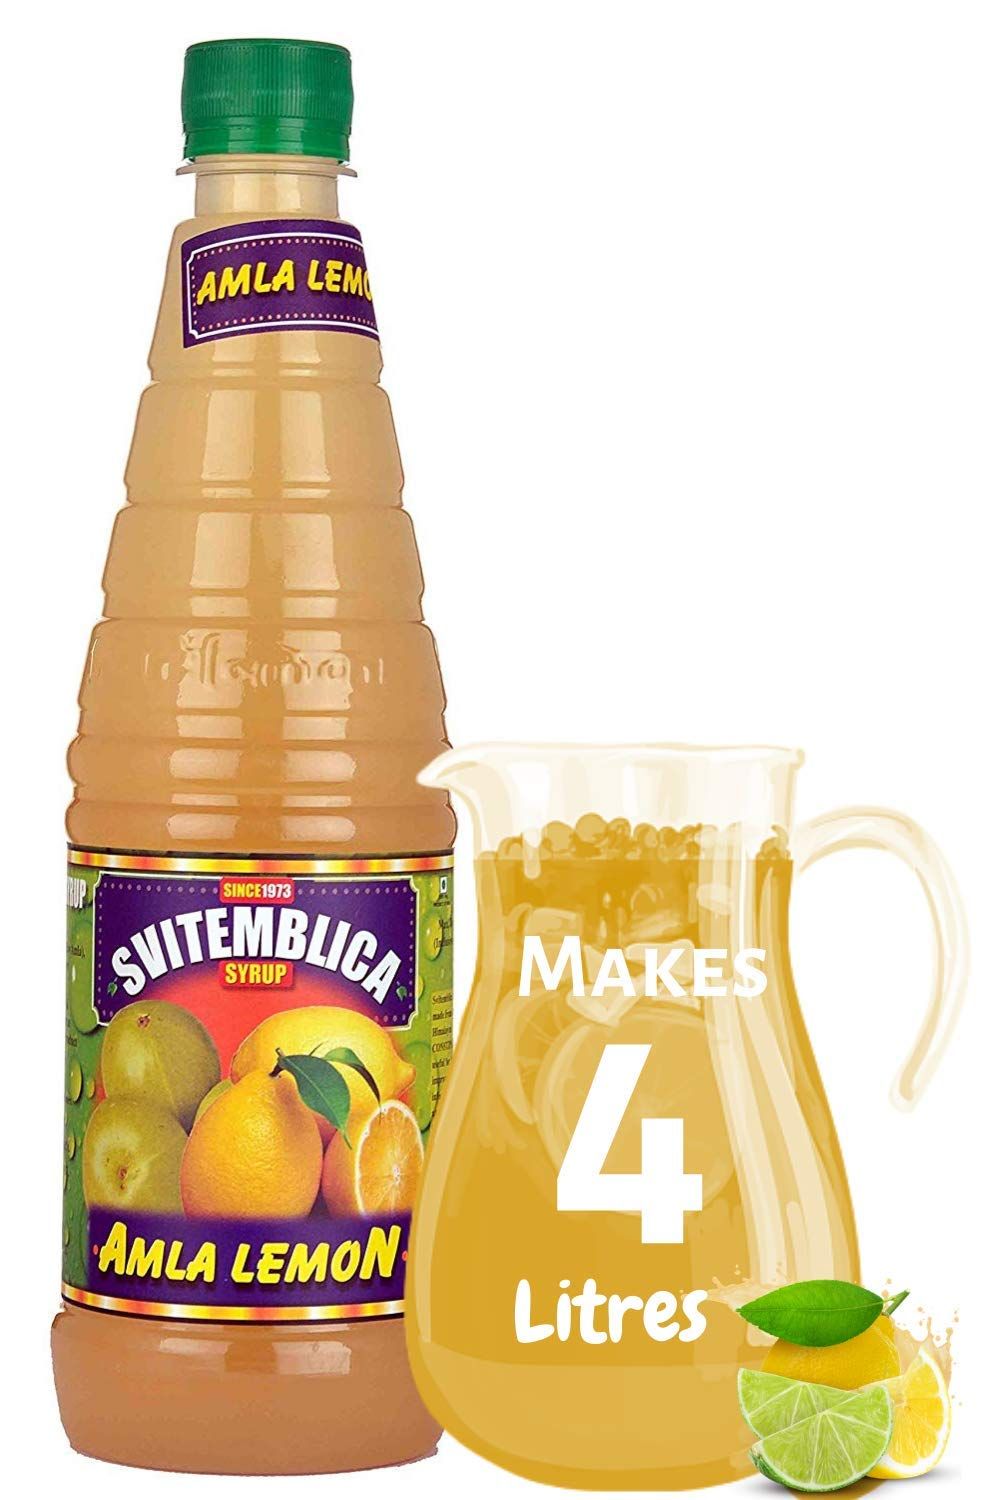 Svitembica Amla Lemon Syrup Image